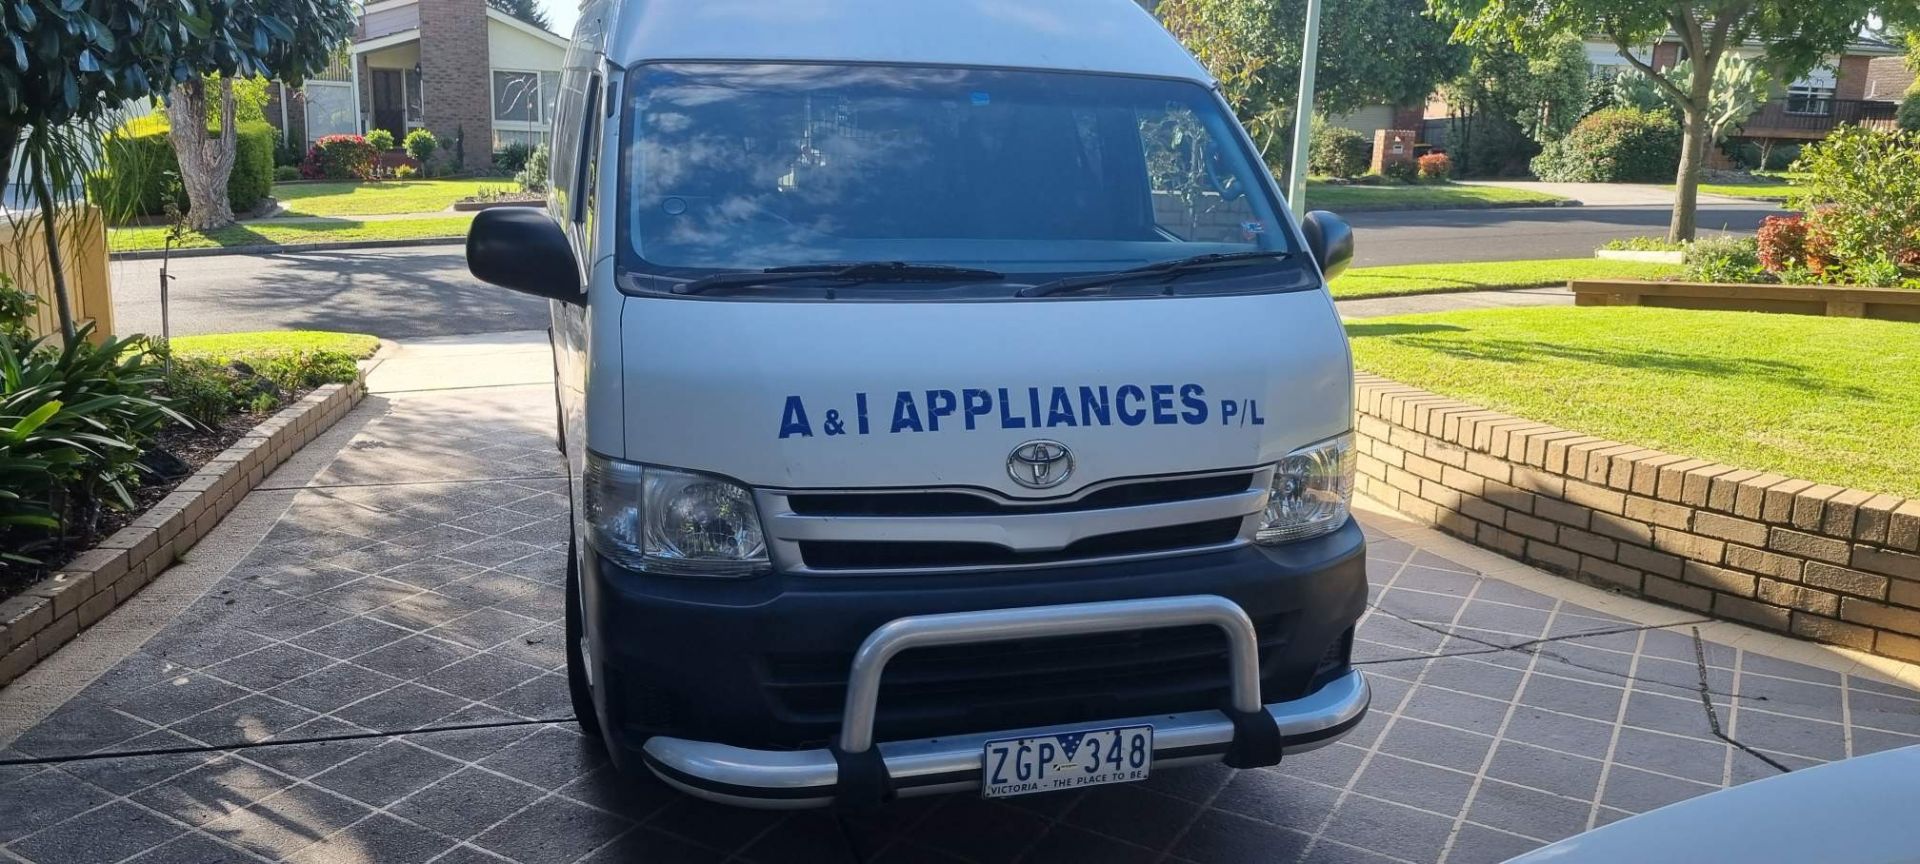 A & I Appliances